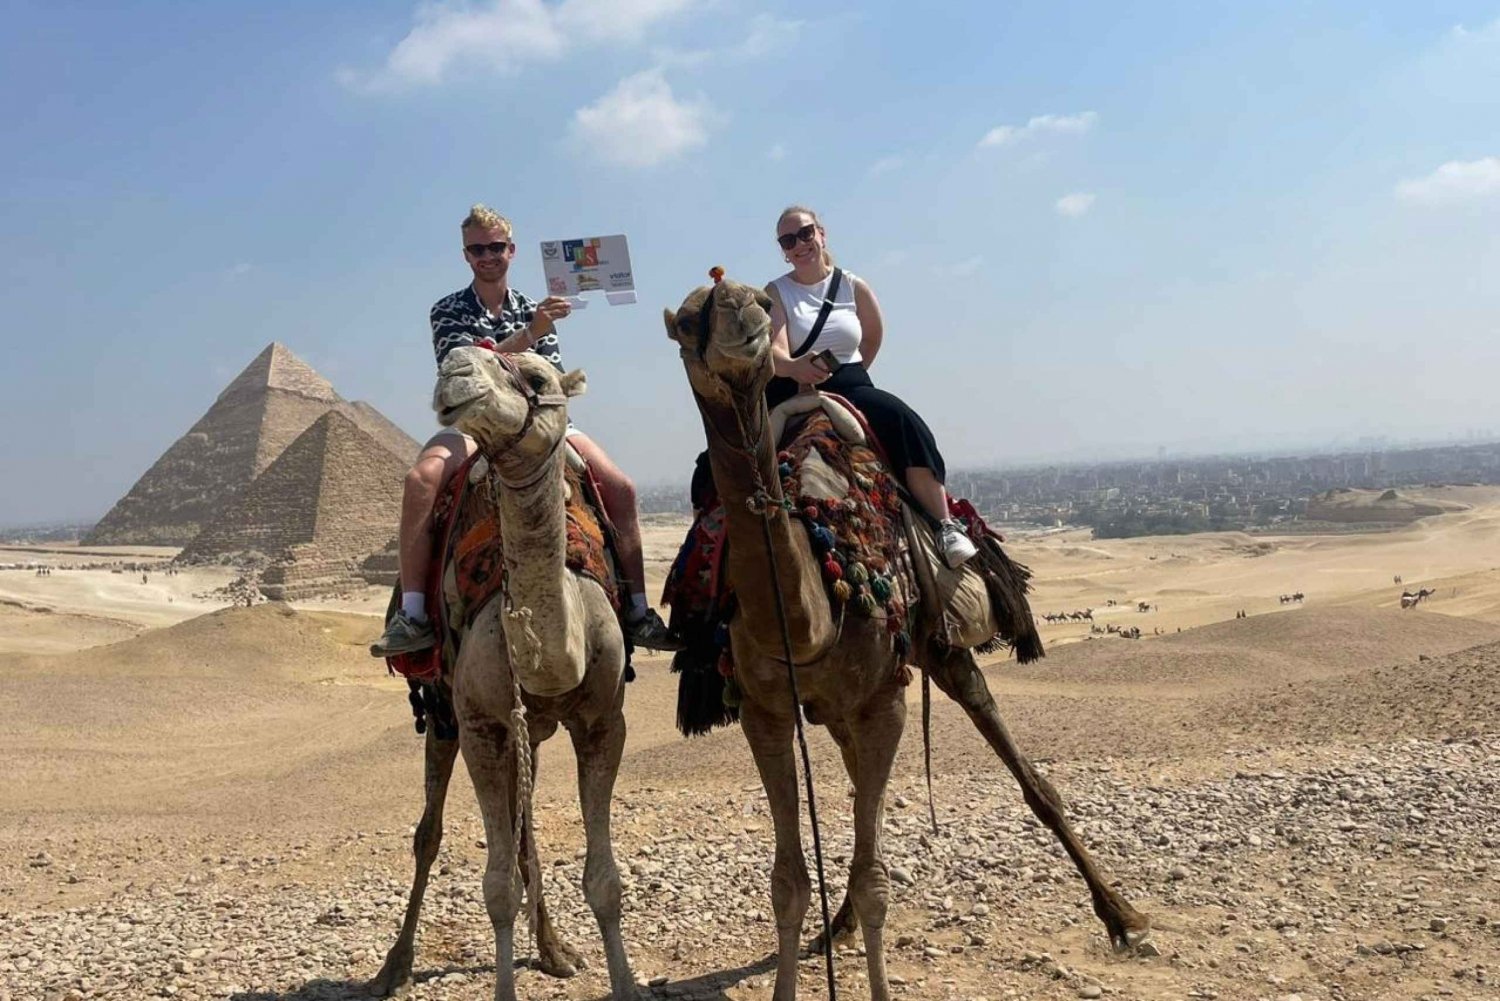 Pyramids, Nile Cruise & Lake Nasser Cruise